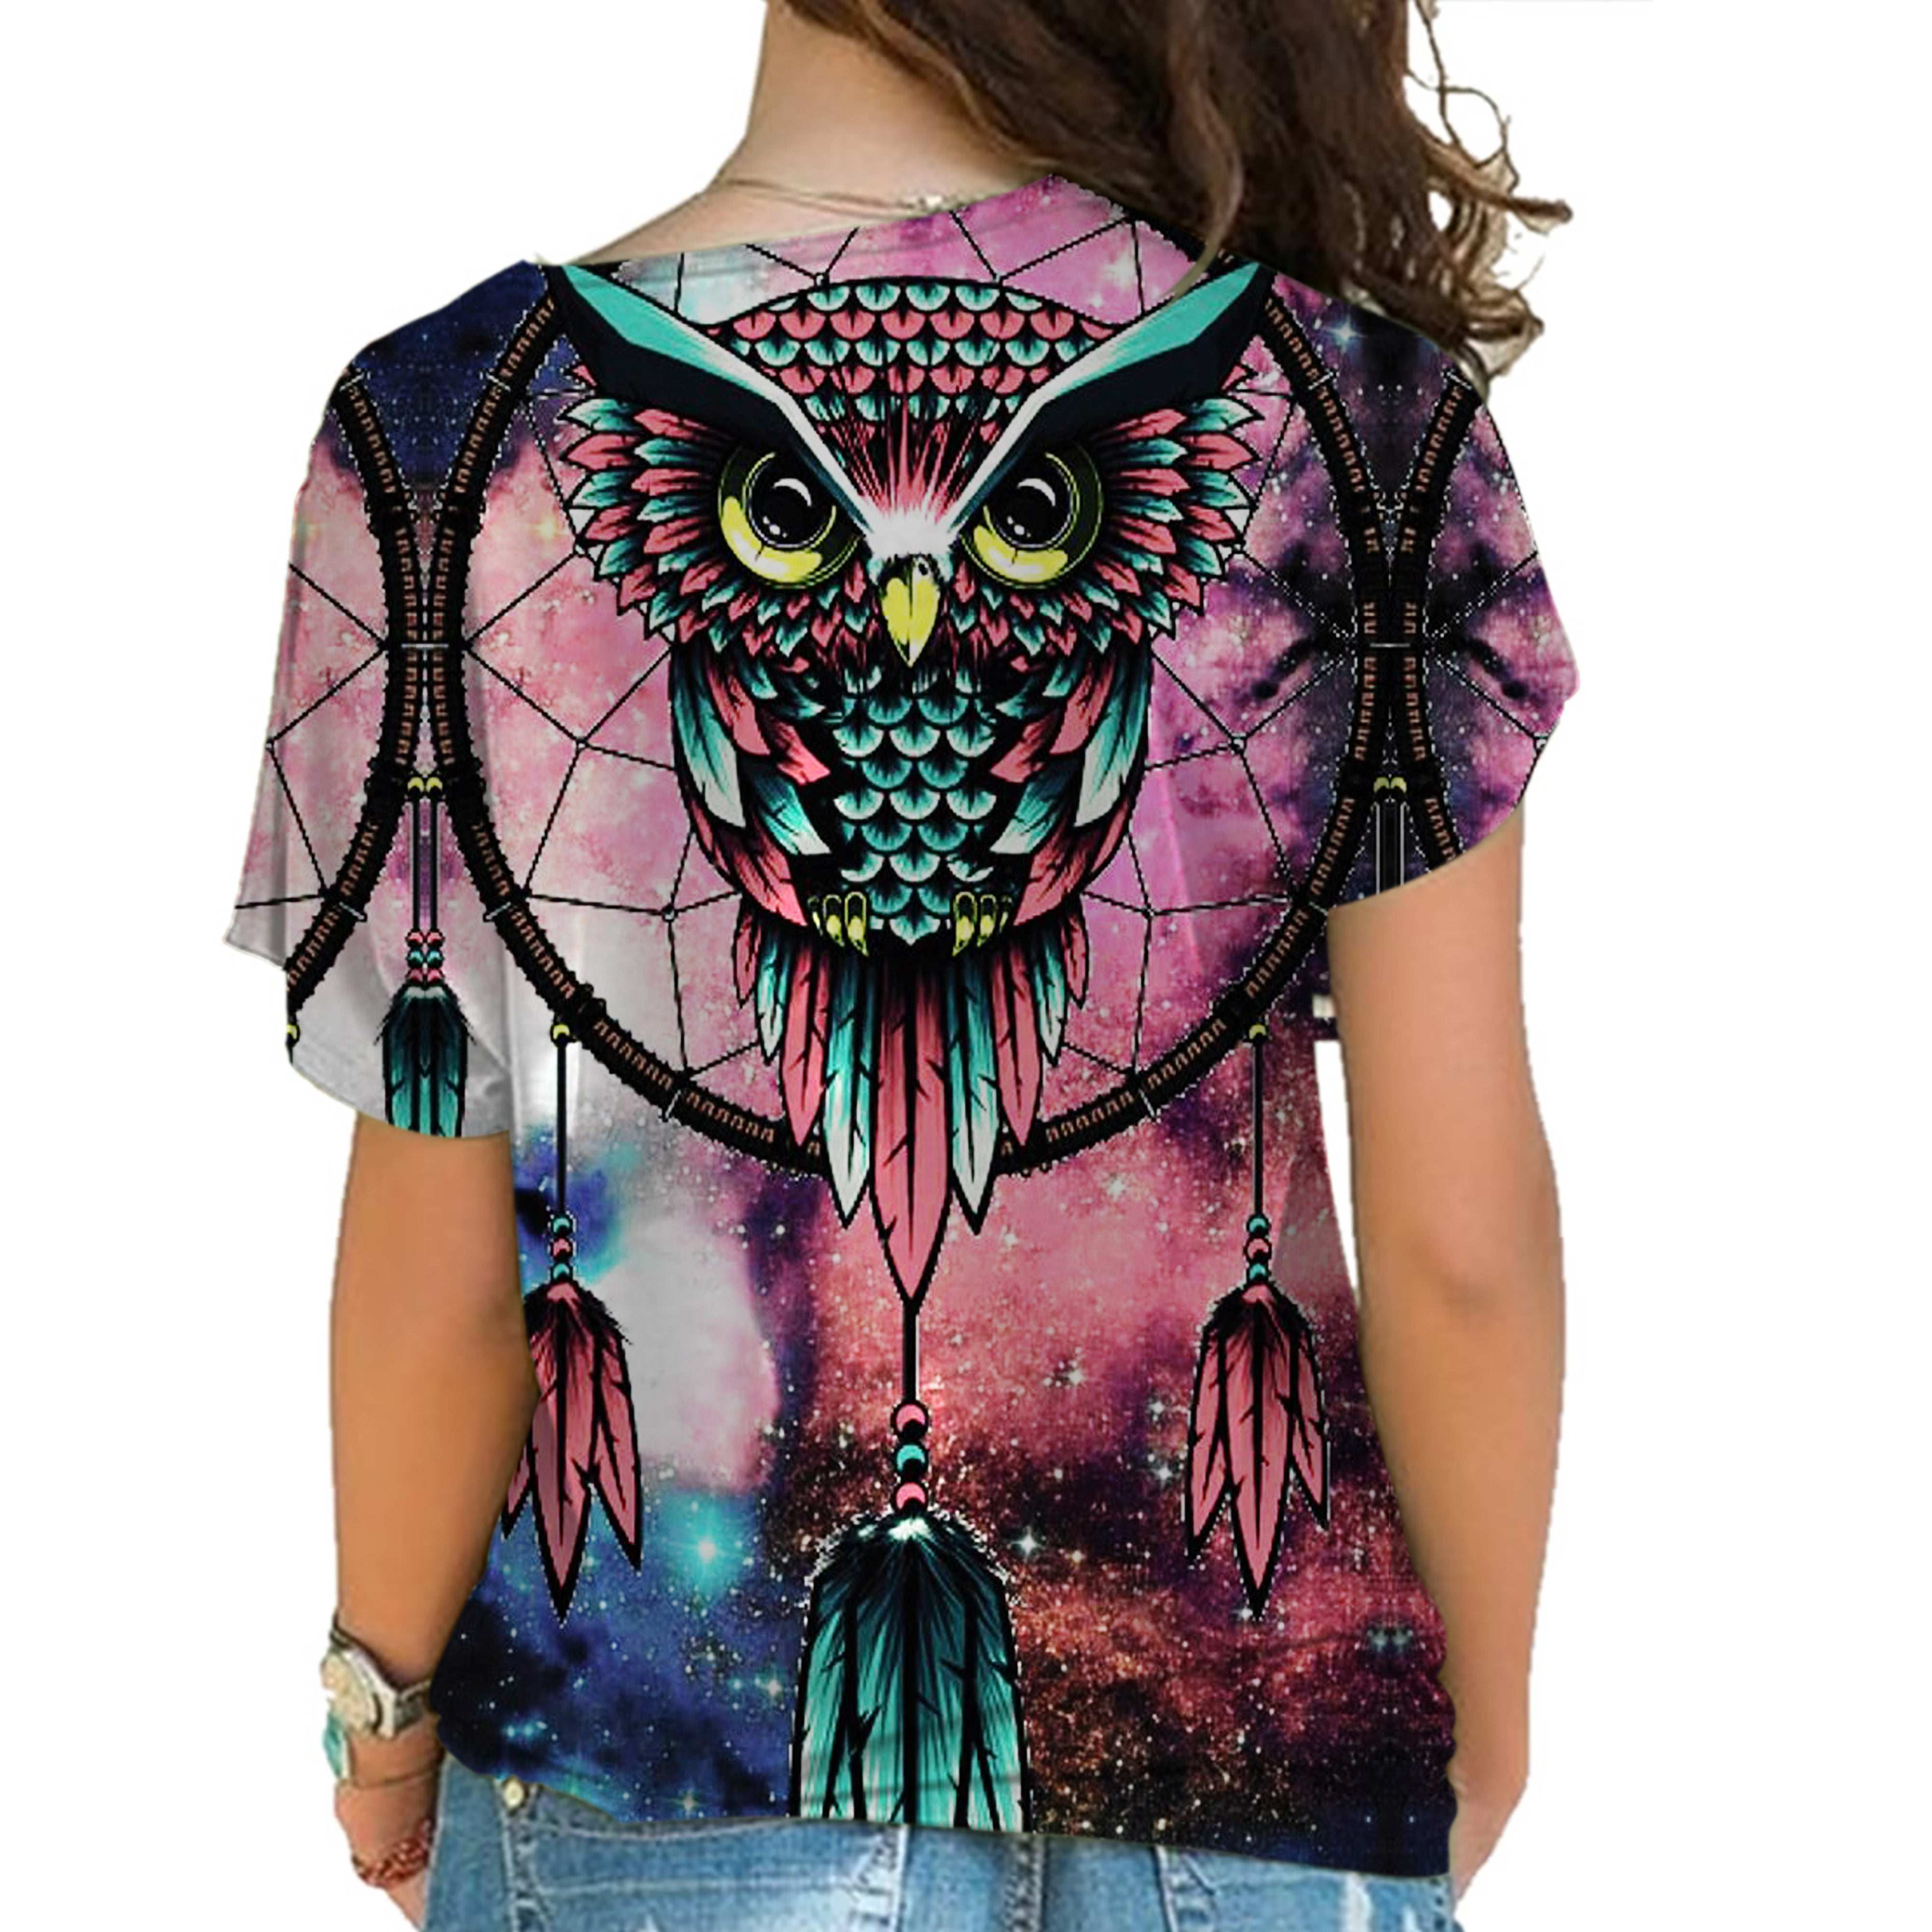 Powwow Store native american cross shoulder shirt 1197